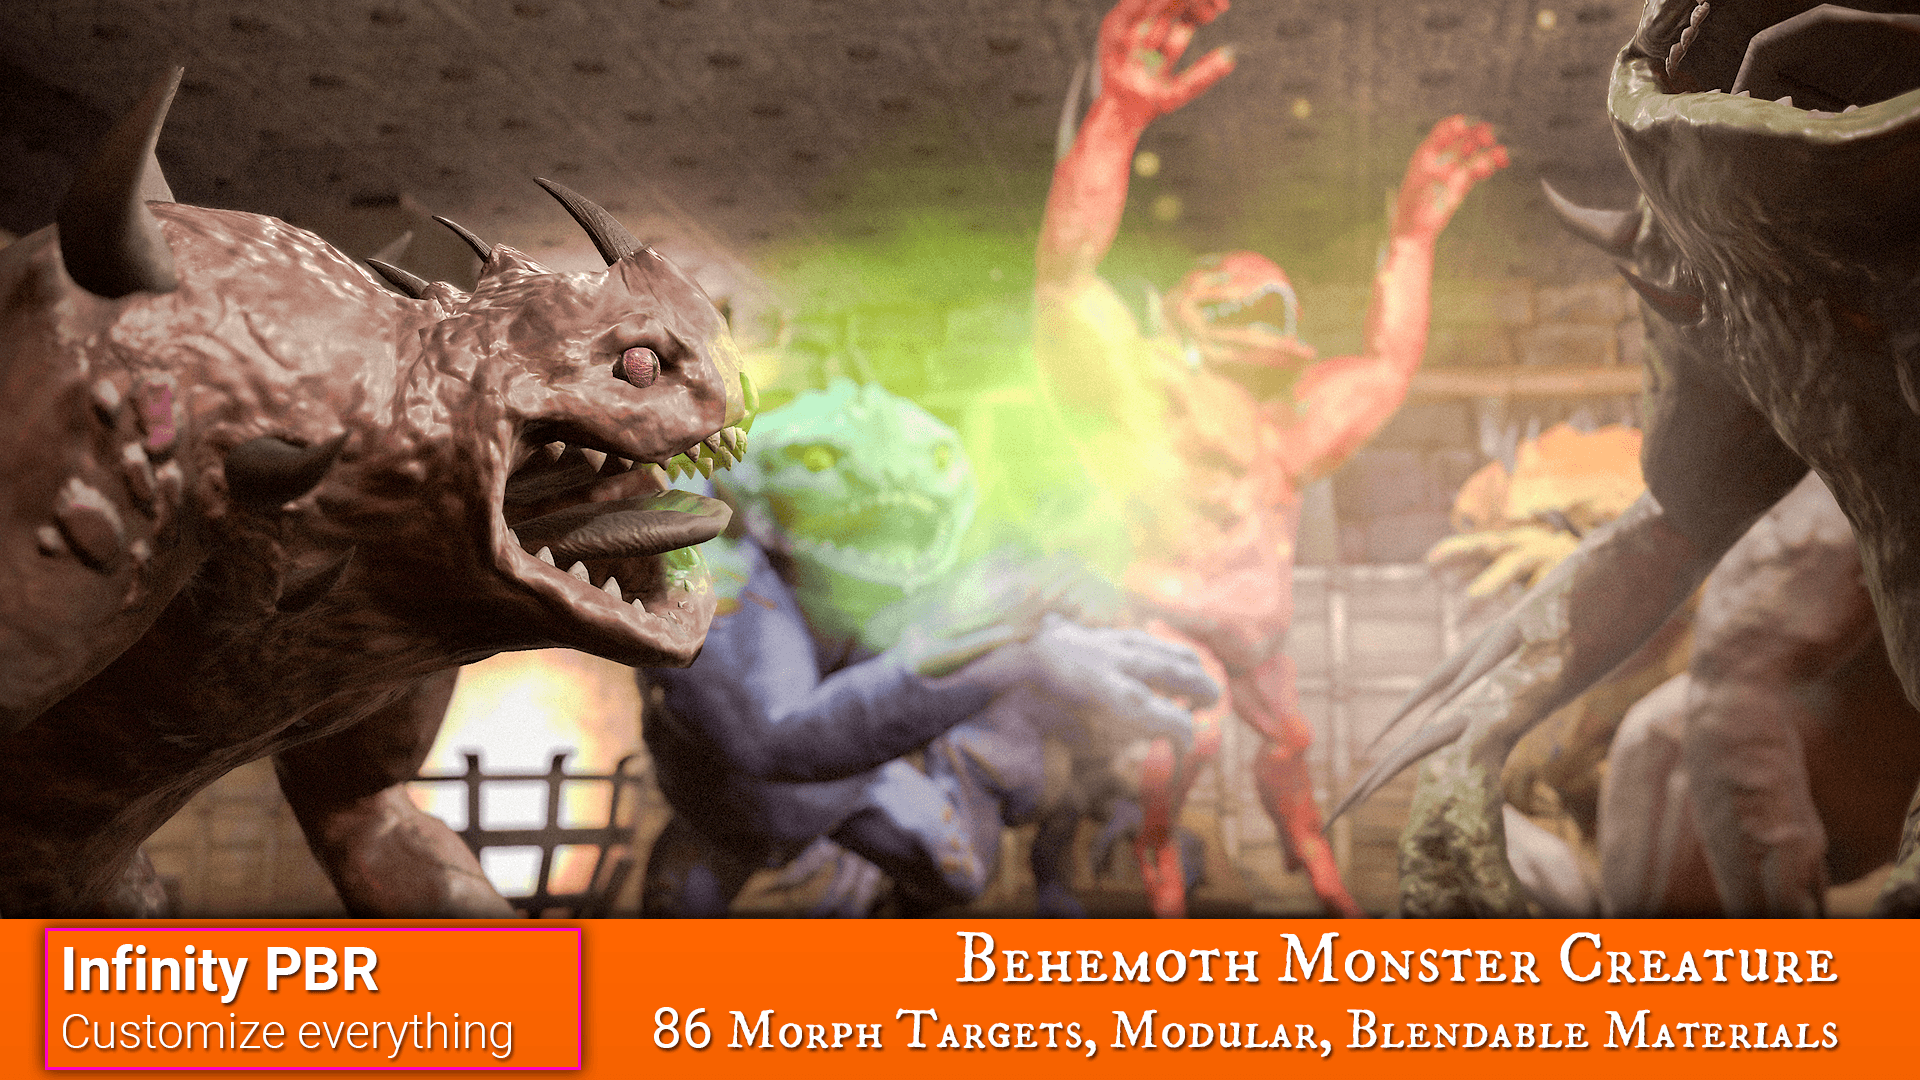 The Behemoth - Monster Creature #1 - Fantasy RPG